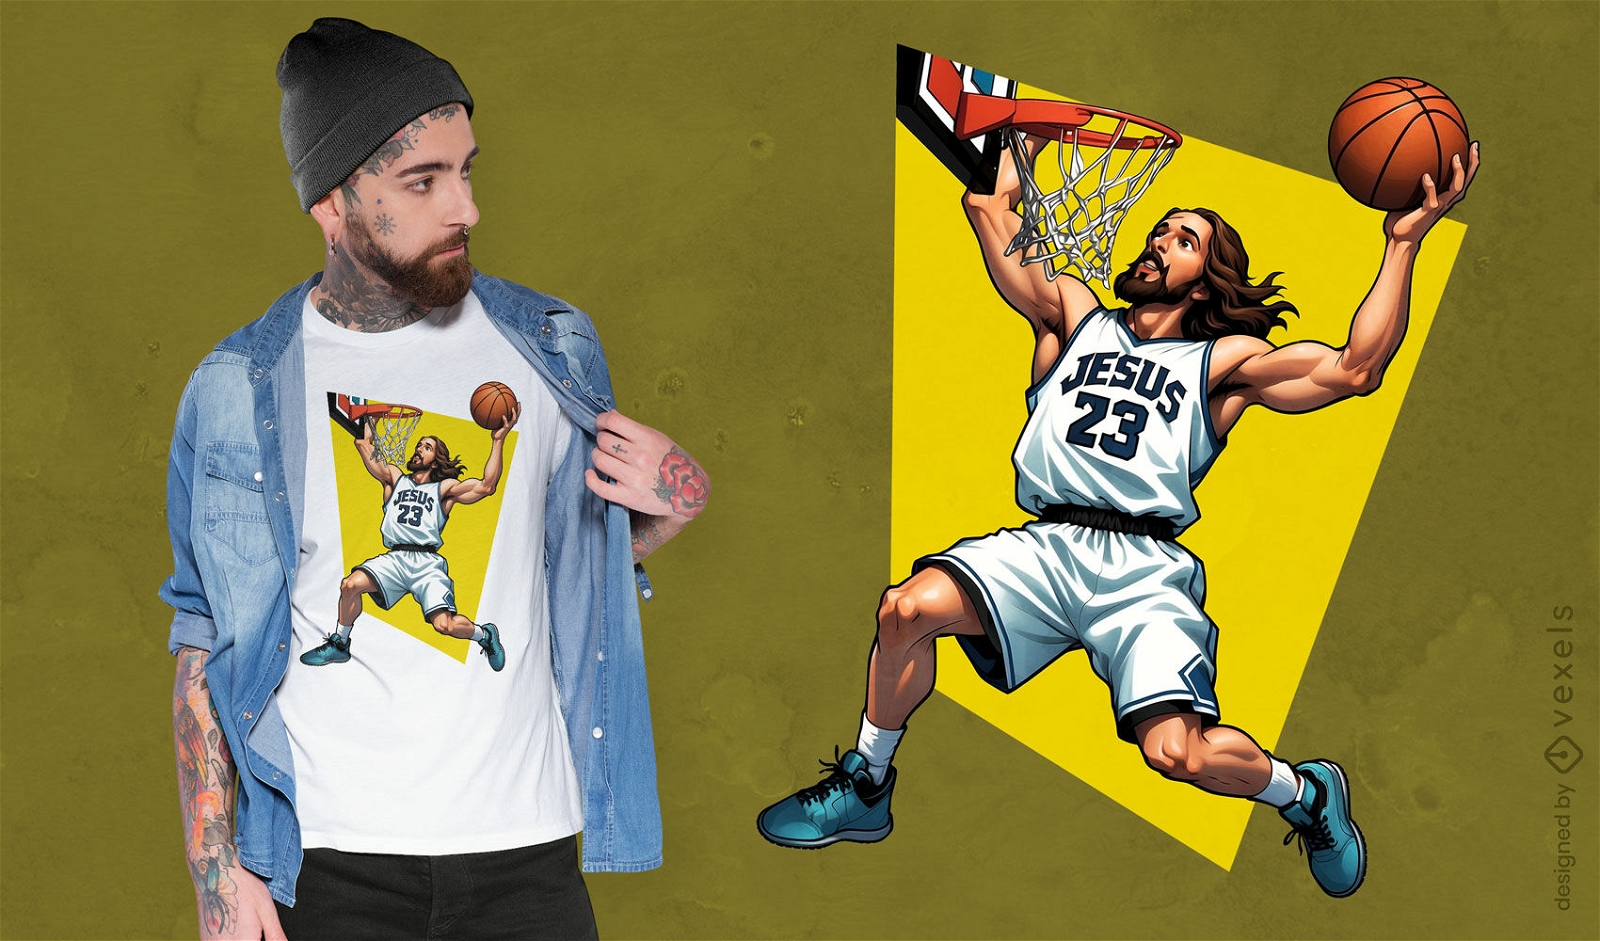 Athletic Jesus slam dunk t-shirt design